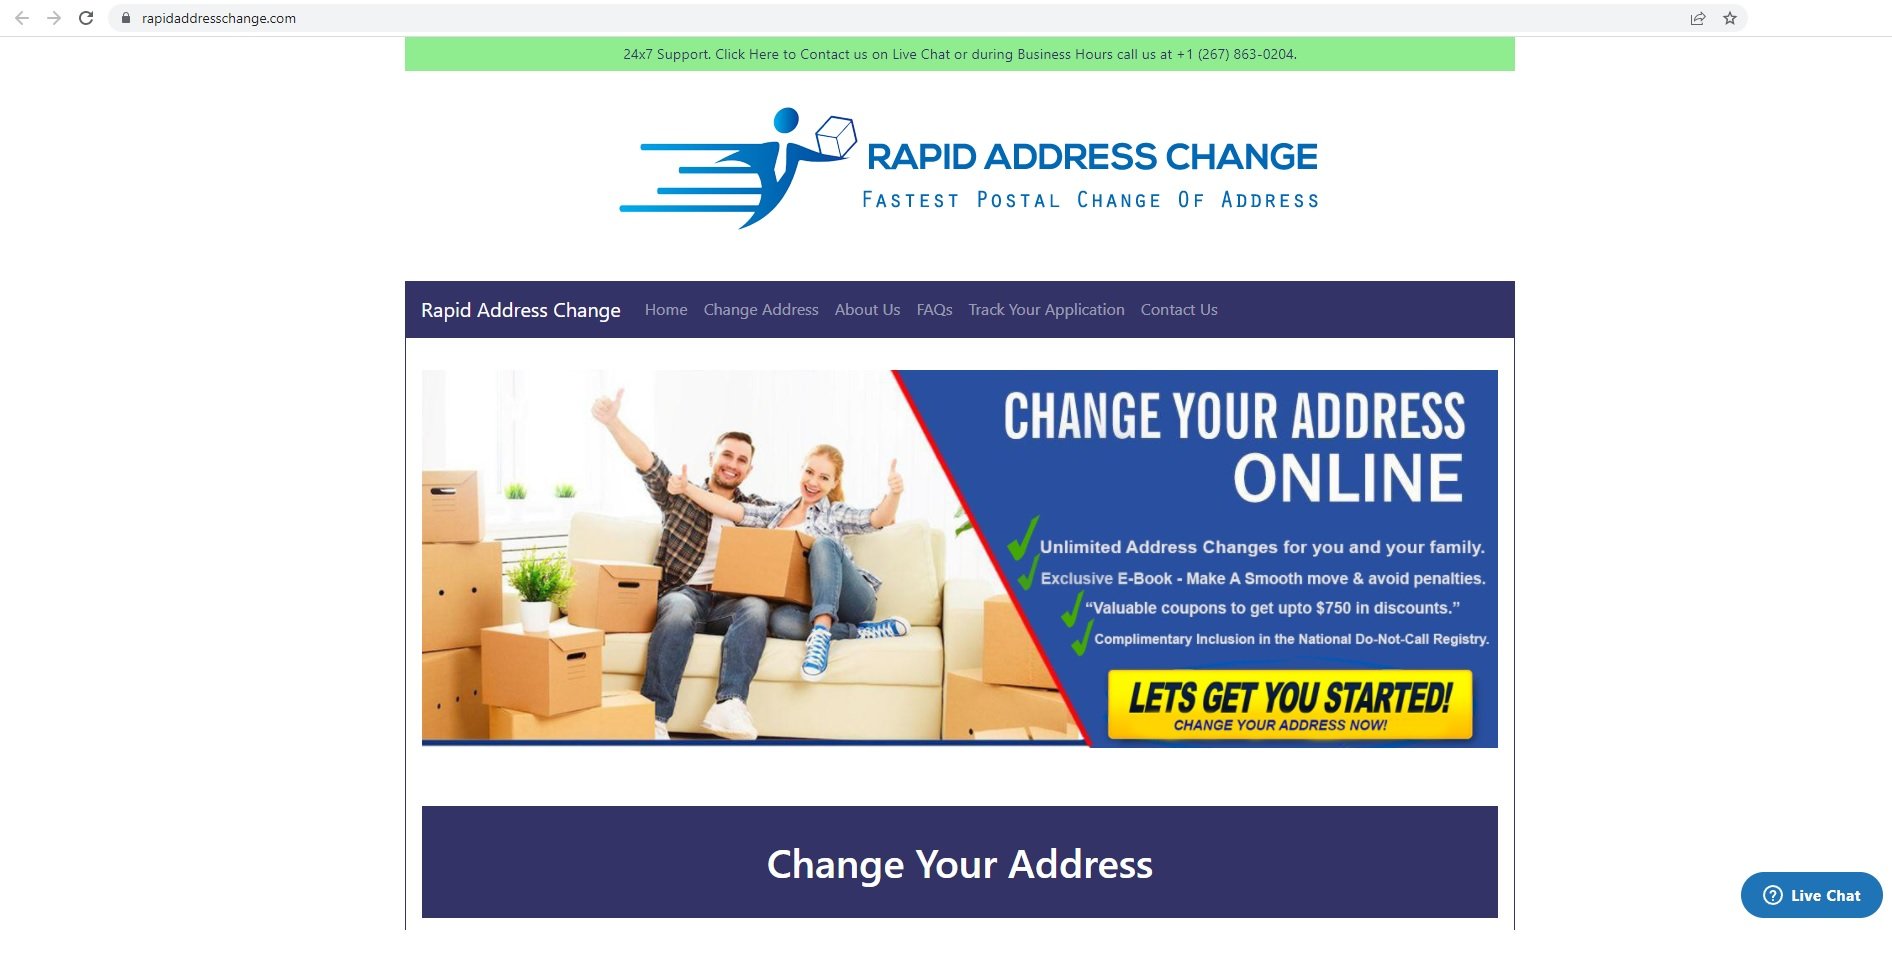 Rapid Address Change at rapidaddresschange.com